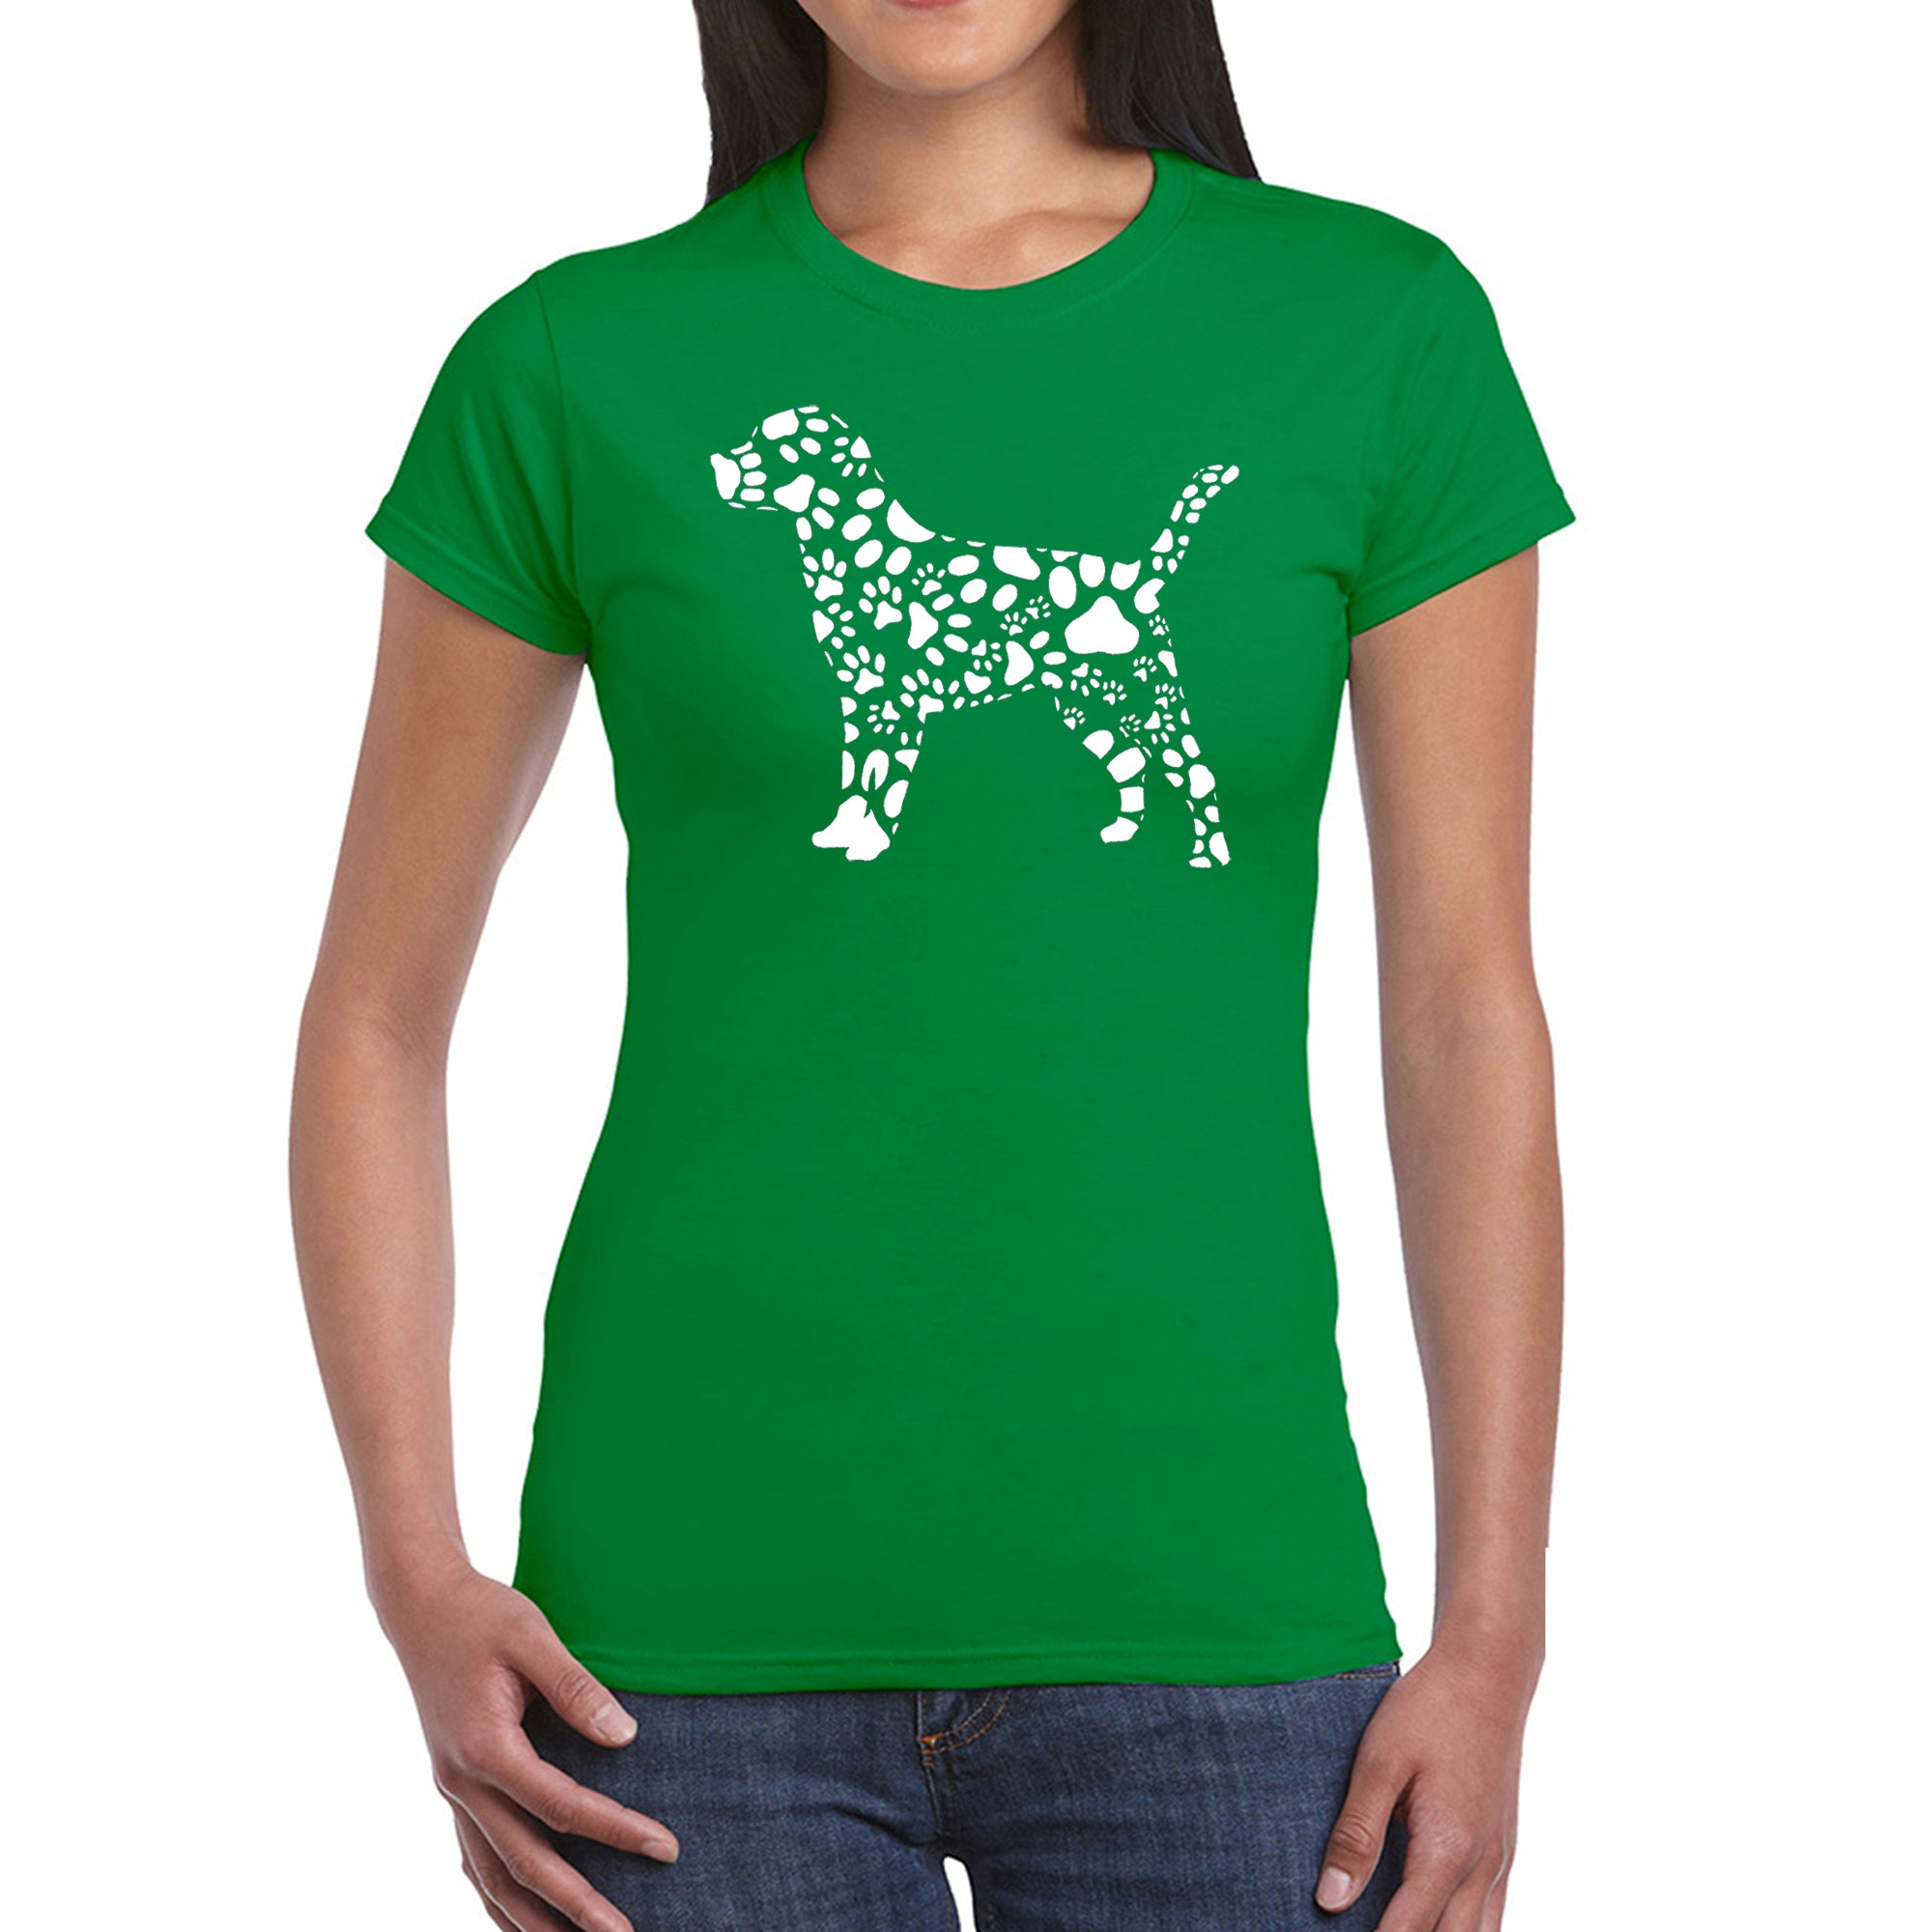 Dog Paw Prints - Women's Word Art T-Shirt - Kelly - X-Large